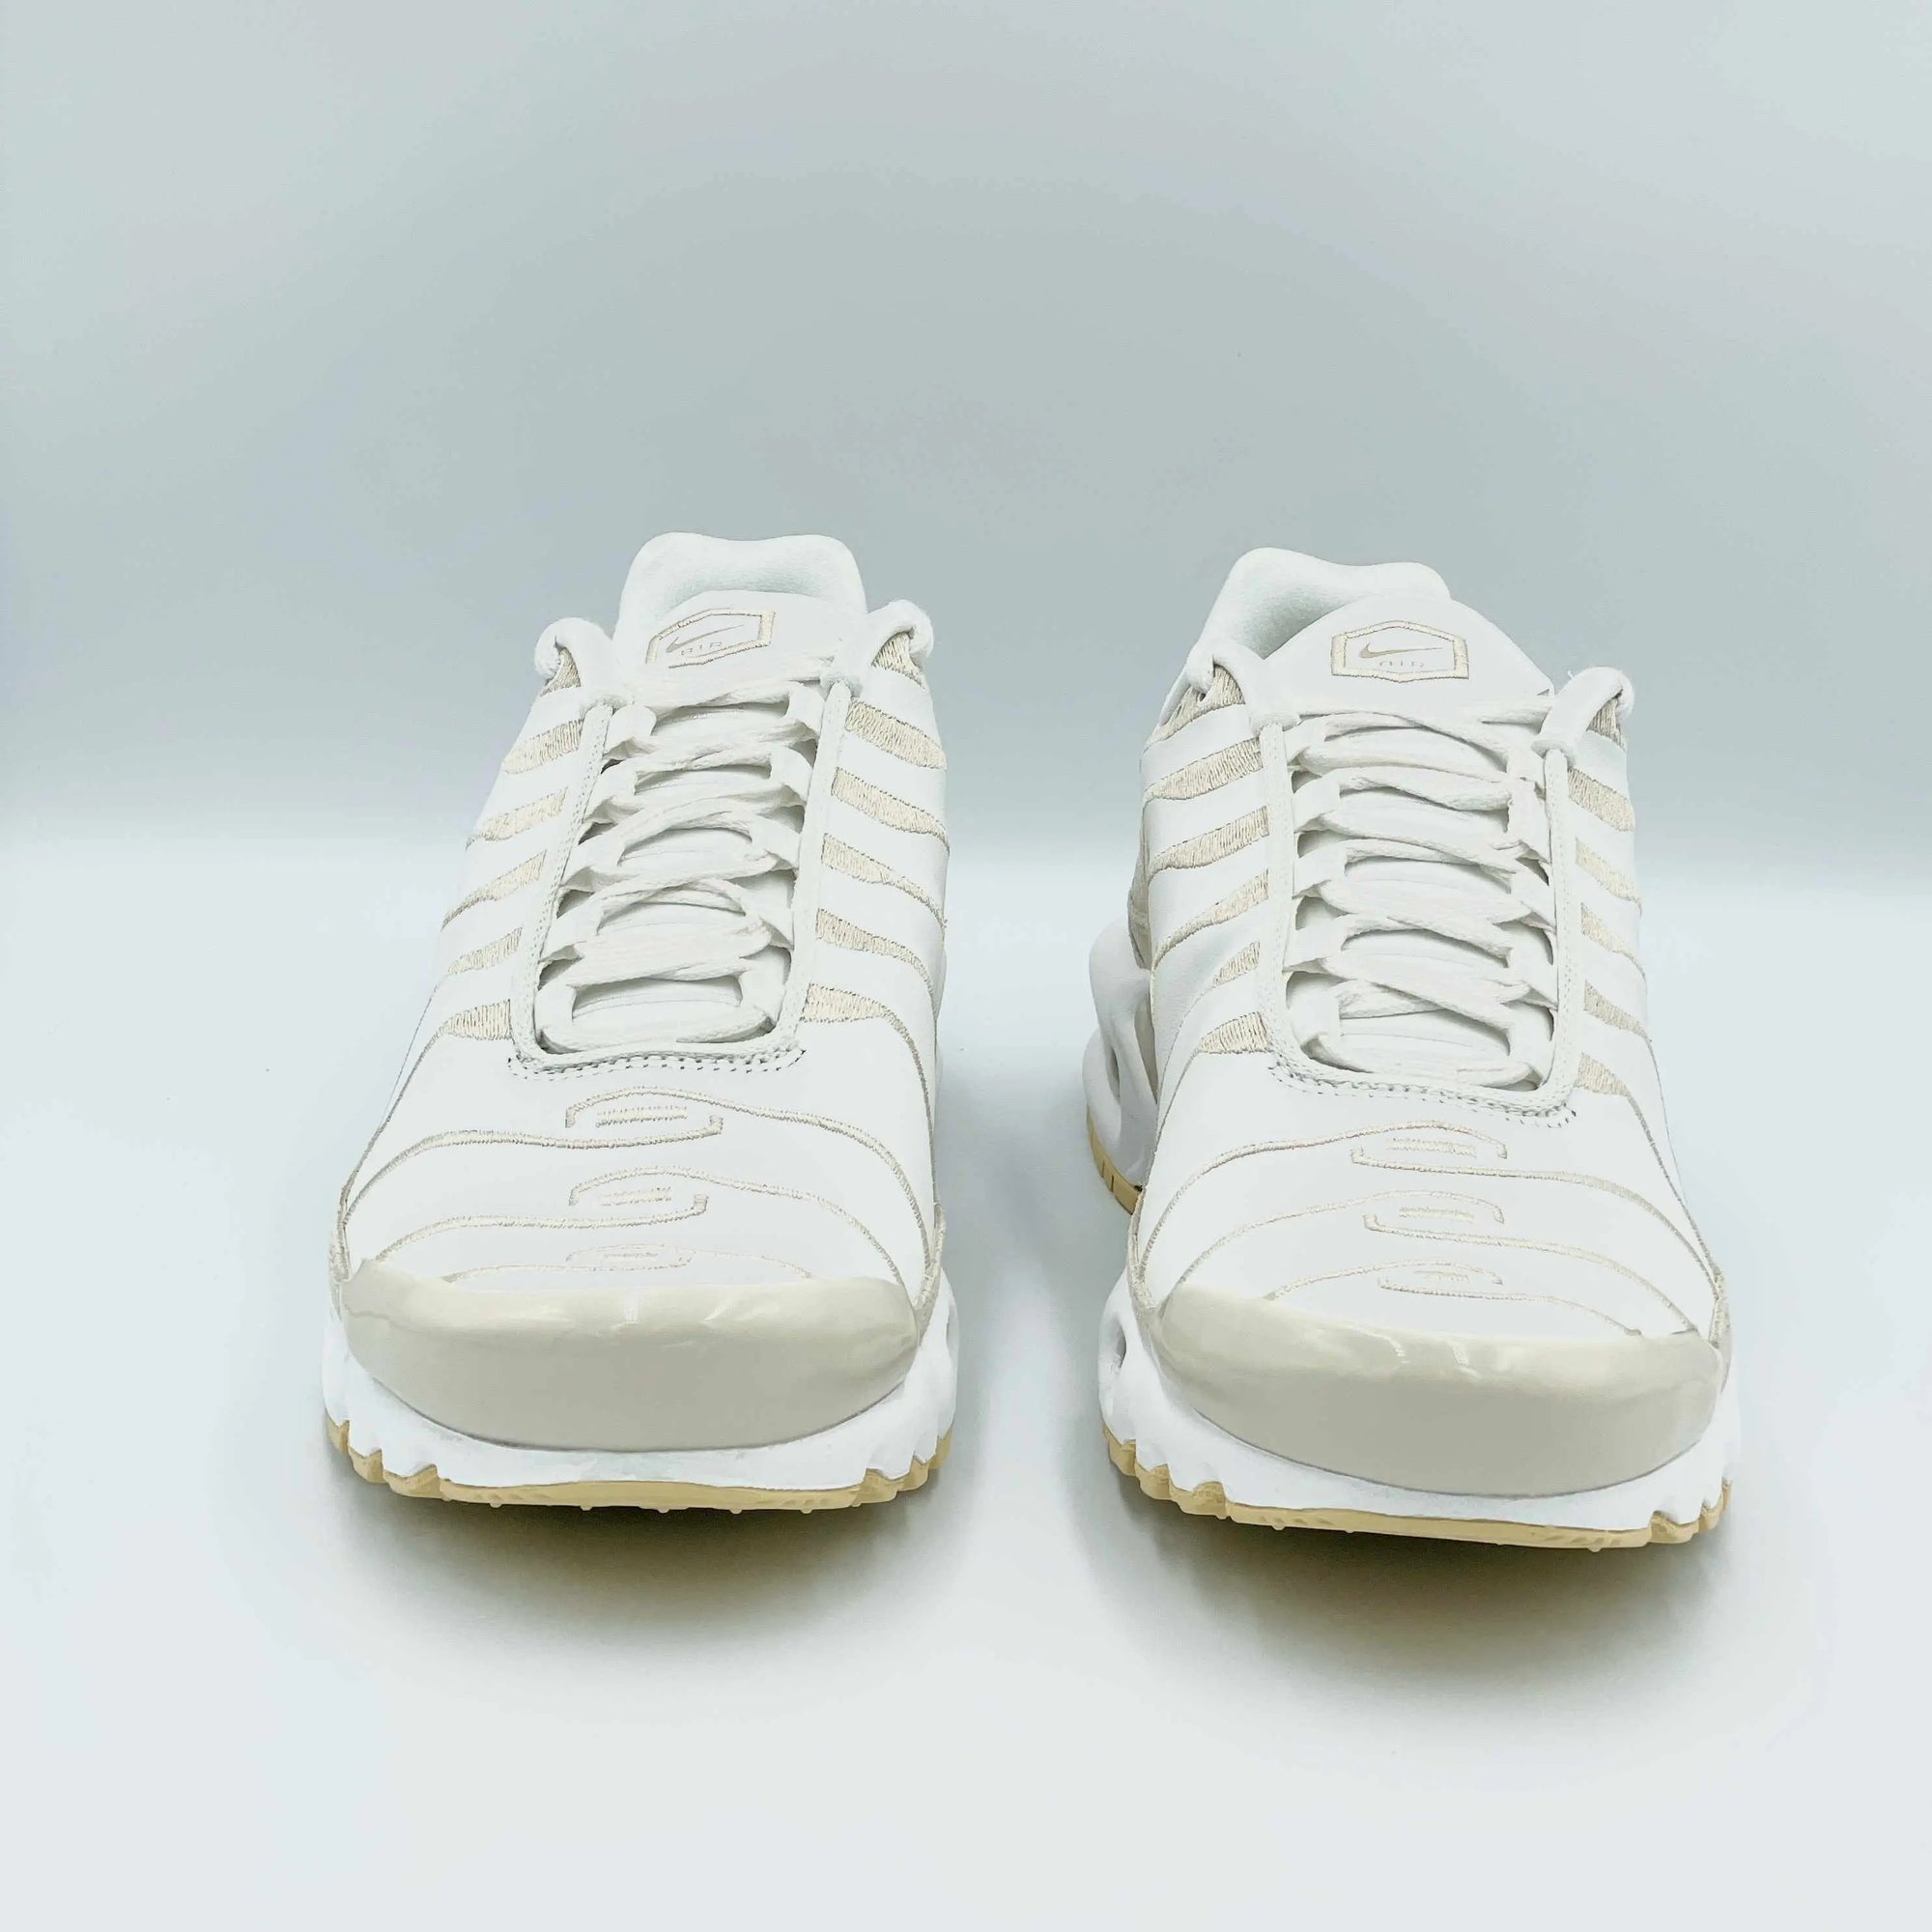 Nike TN Air Max Plus Premium Sanddrift  SA Sneakers